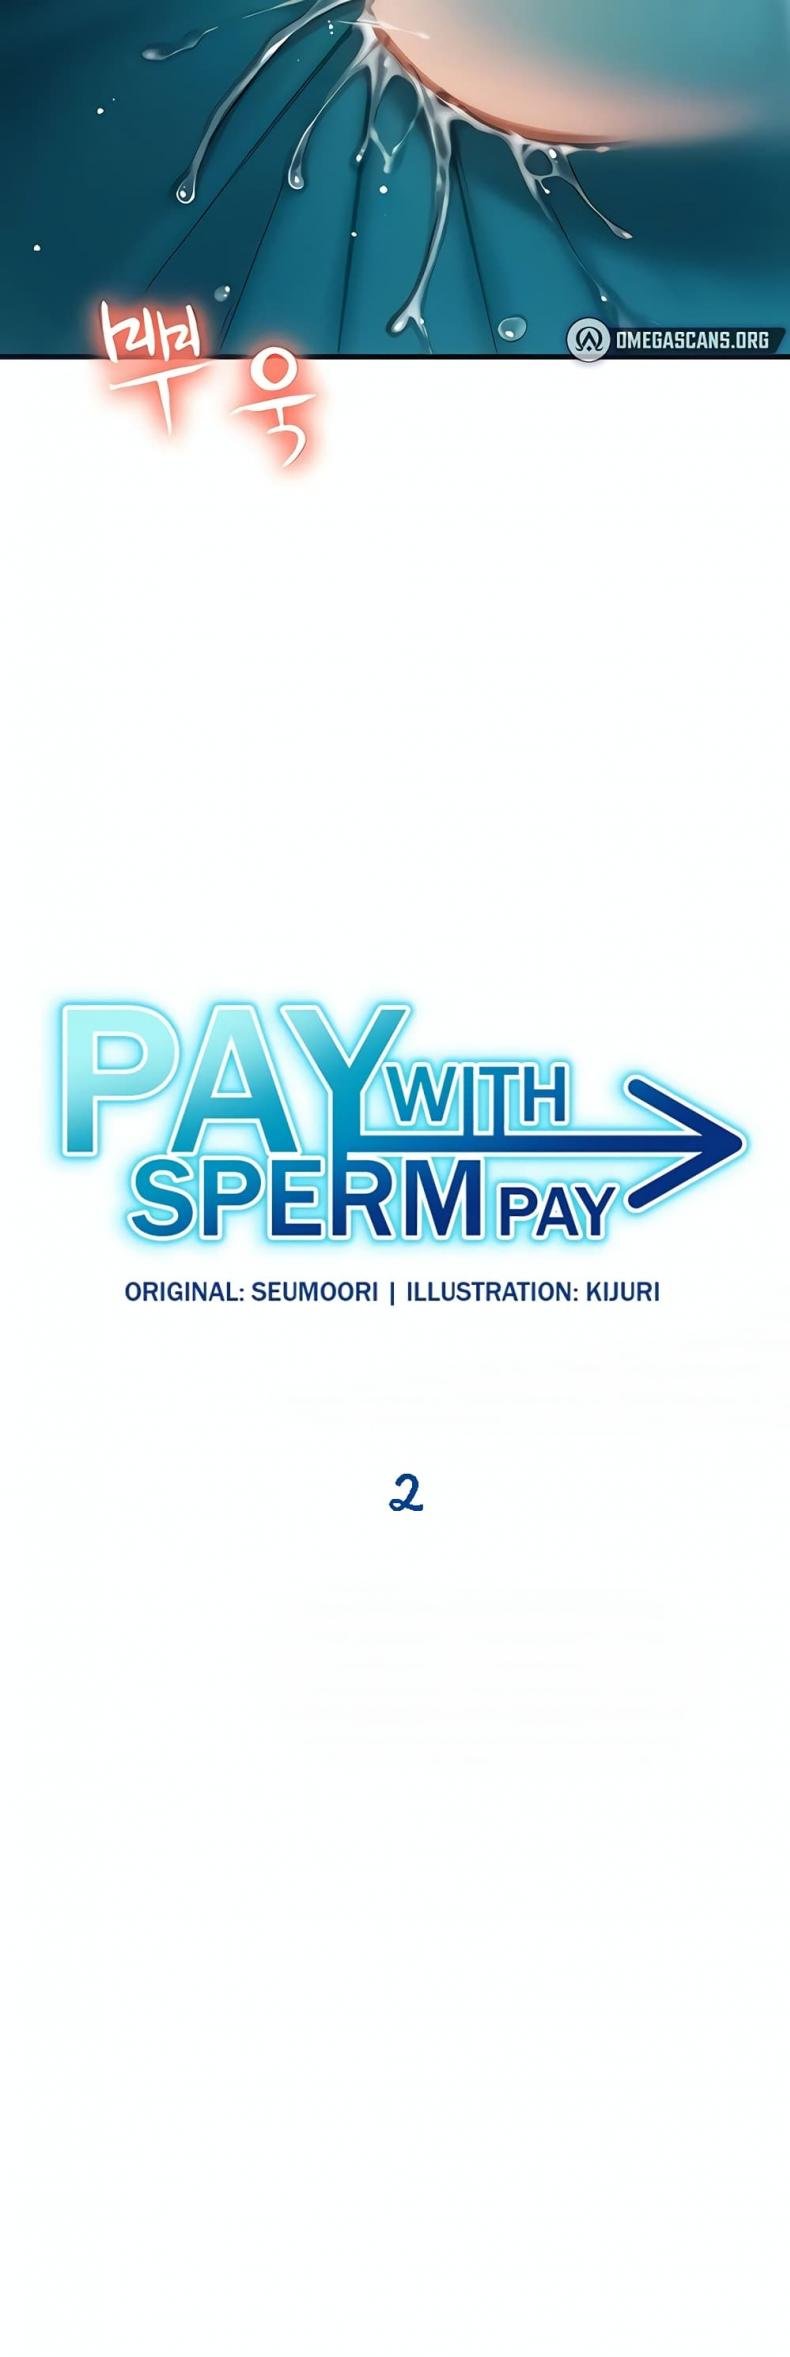 Pay with Sperm Pay 2 ภาพที่ 2